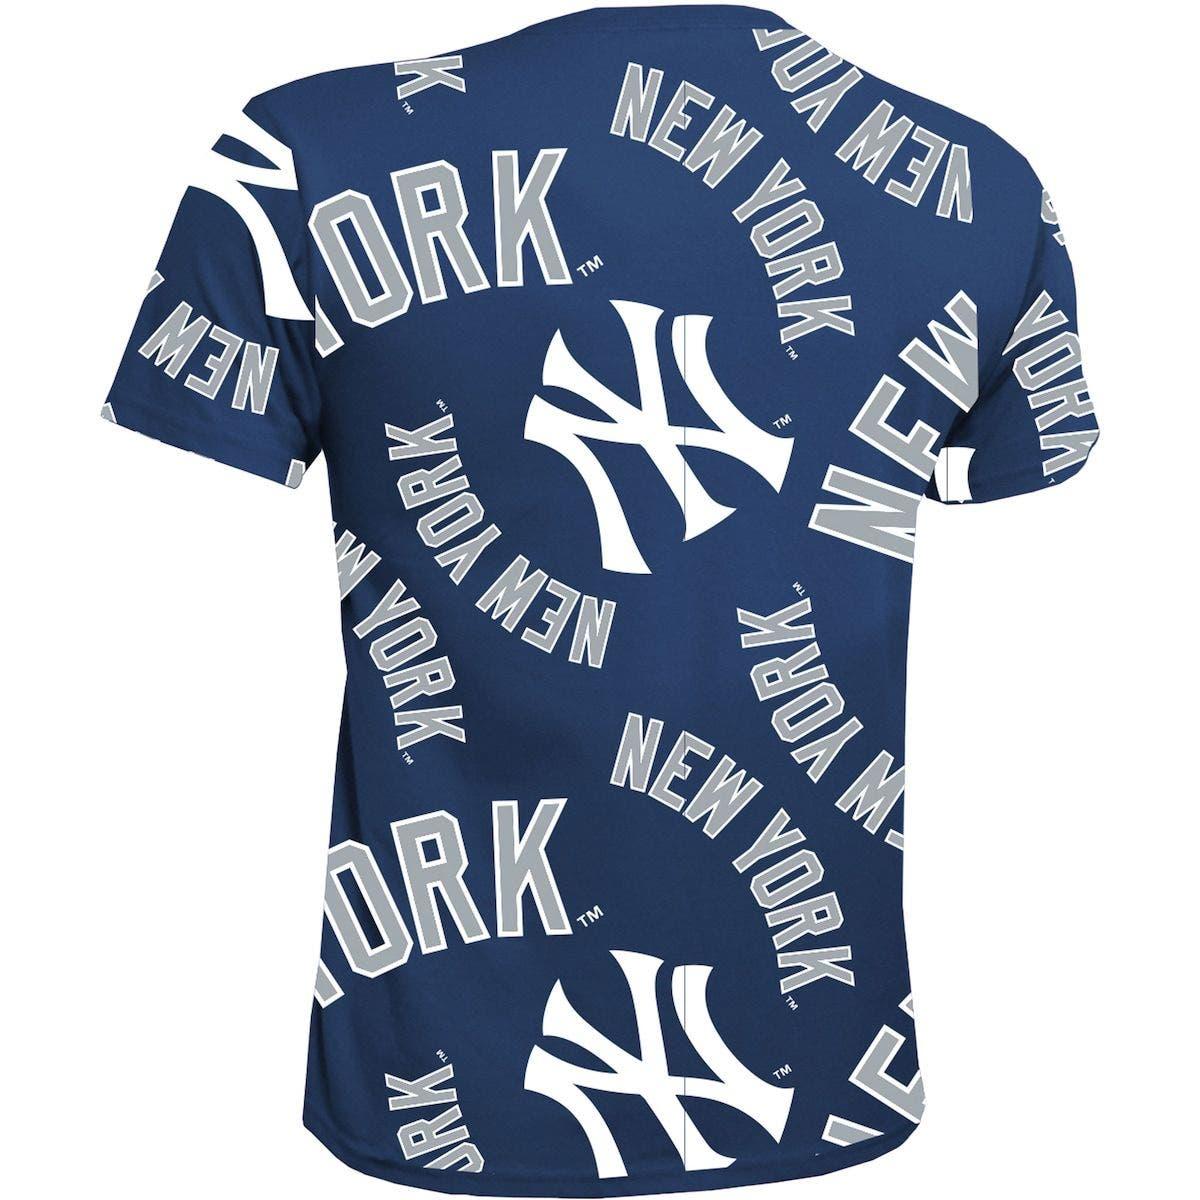 Stitches Men's Navy, Gray New York Yankees Team Pullover Hoodie